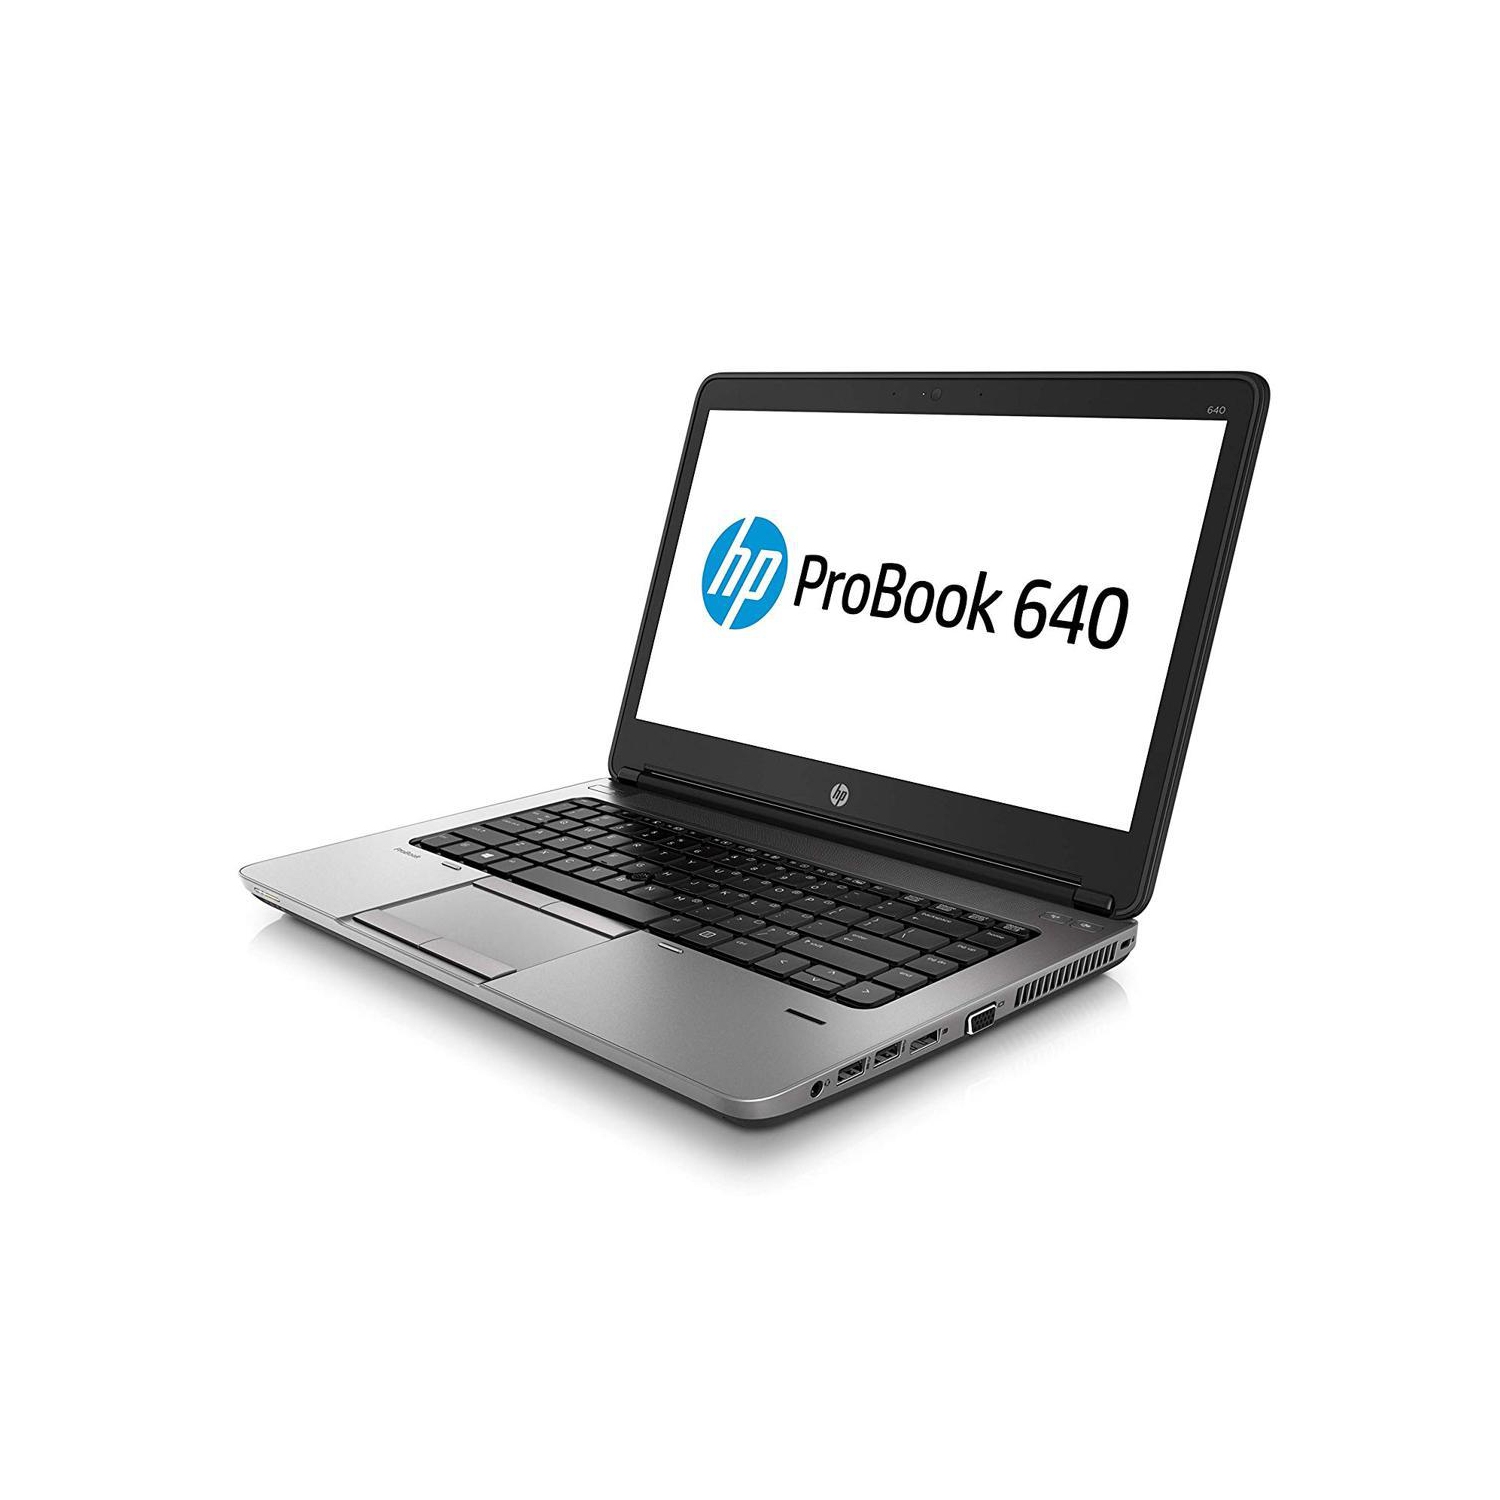 Refurbished (Excellent) - HP ProBook 640 G1 Laptop: Intel Core i5 4200M 2.50GHz, 8GB RAM, 500 GB, 14", Win 10 Pro -Certified Refurbished